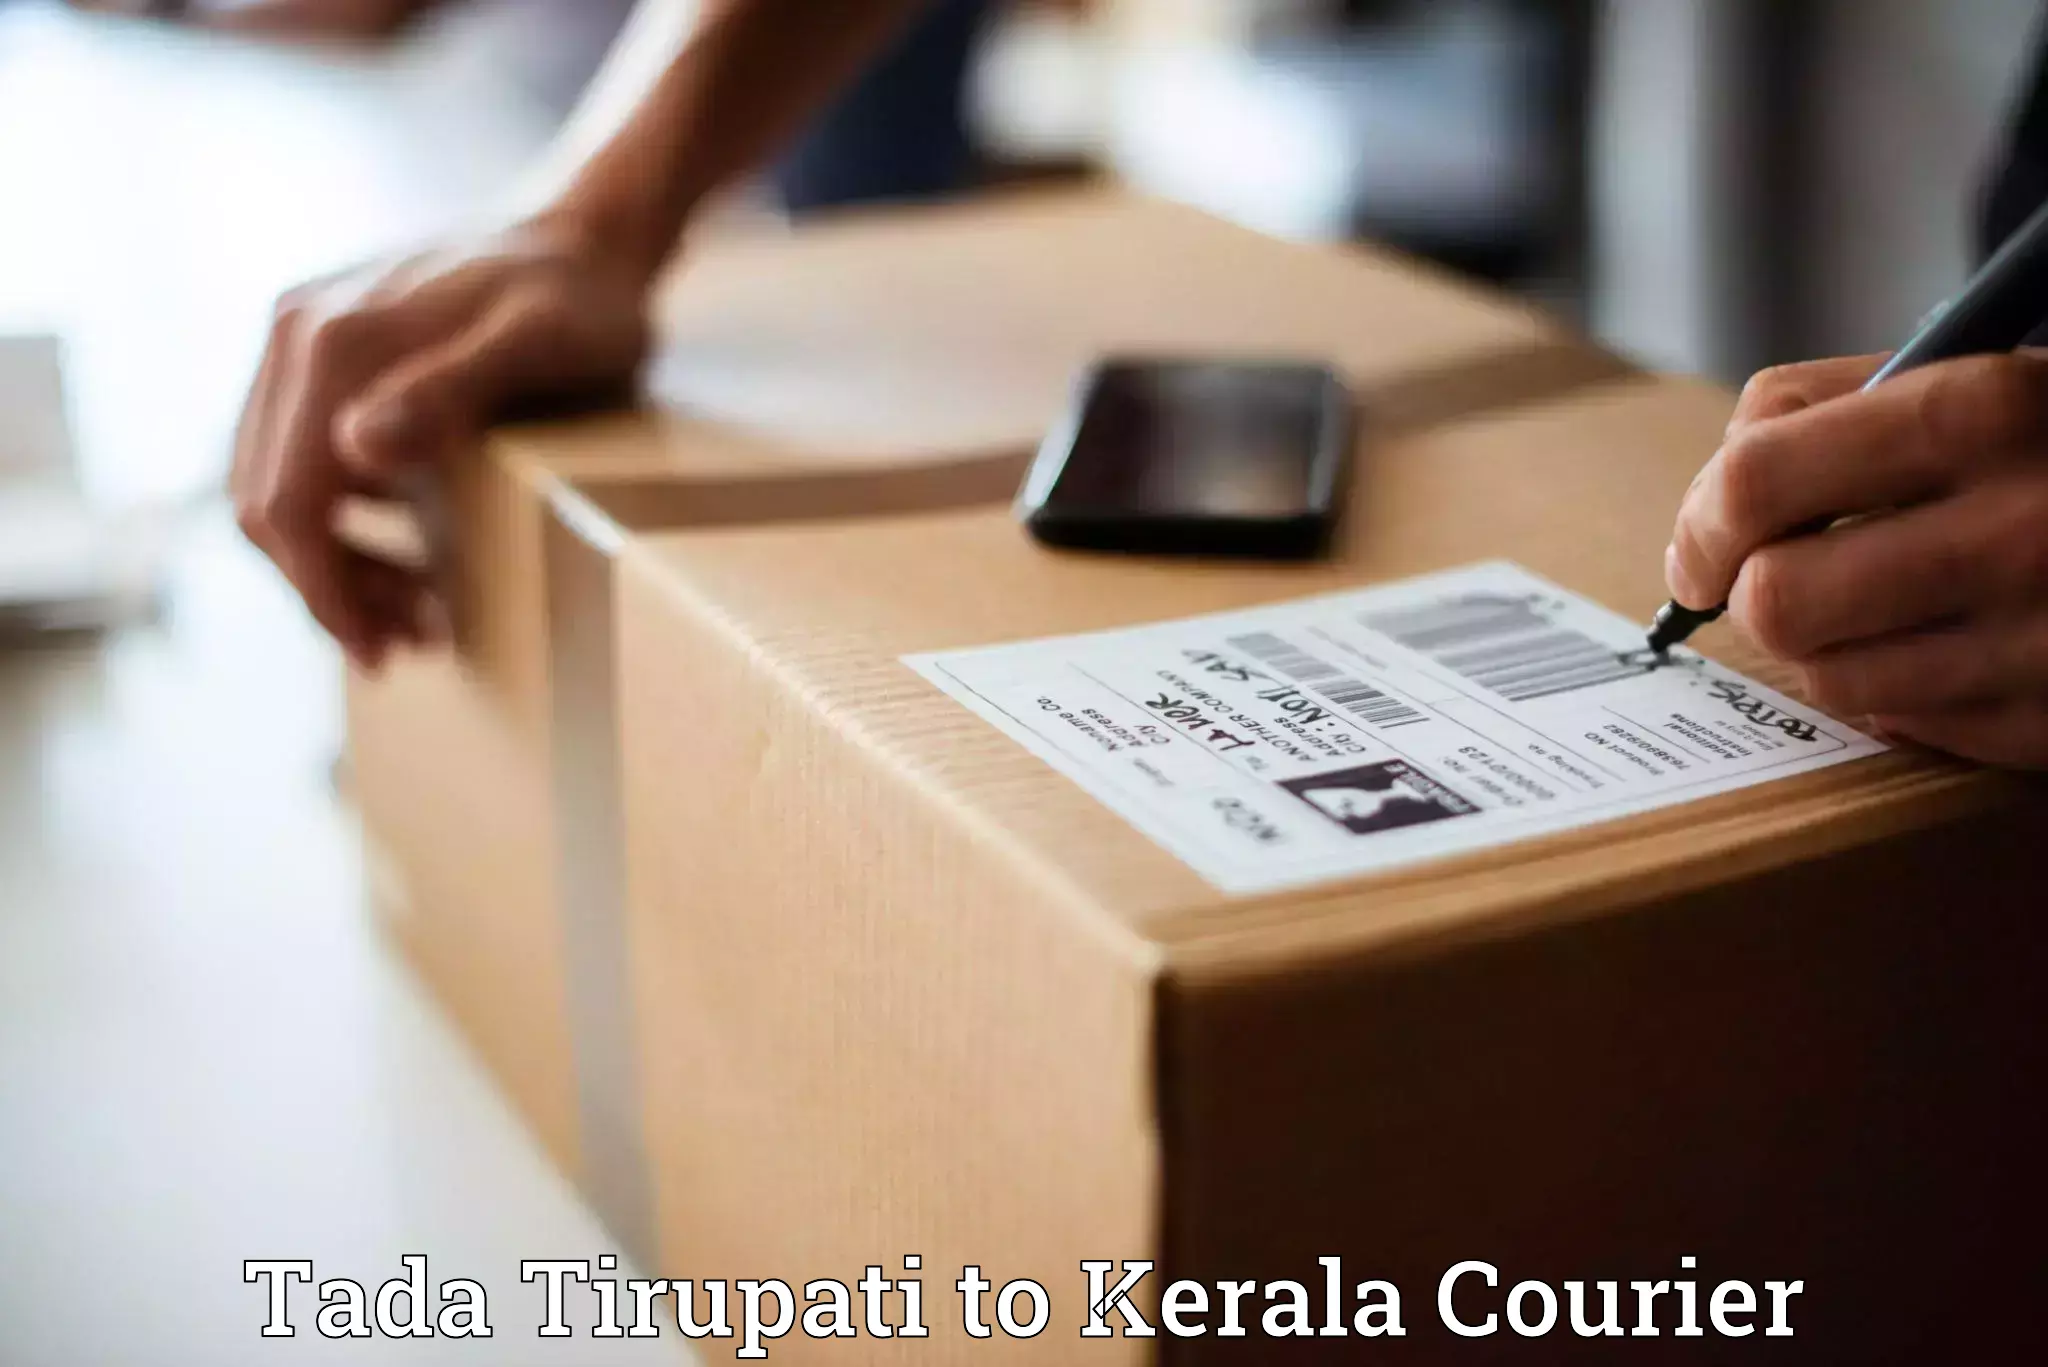 End-to-end delivery Tada Tirupati to Ponekkara